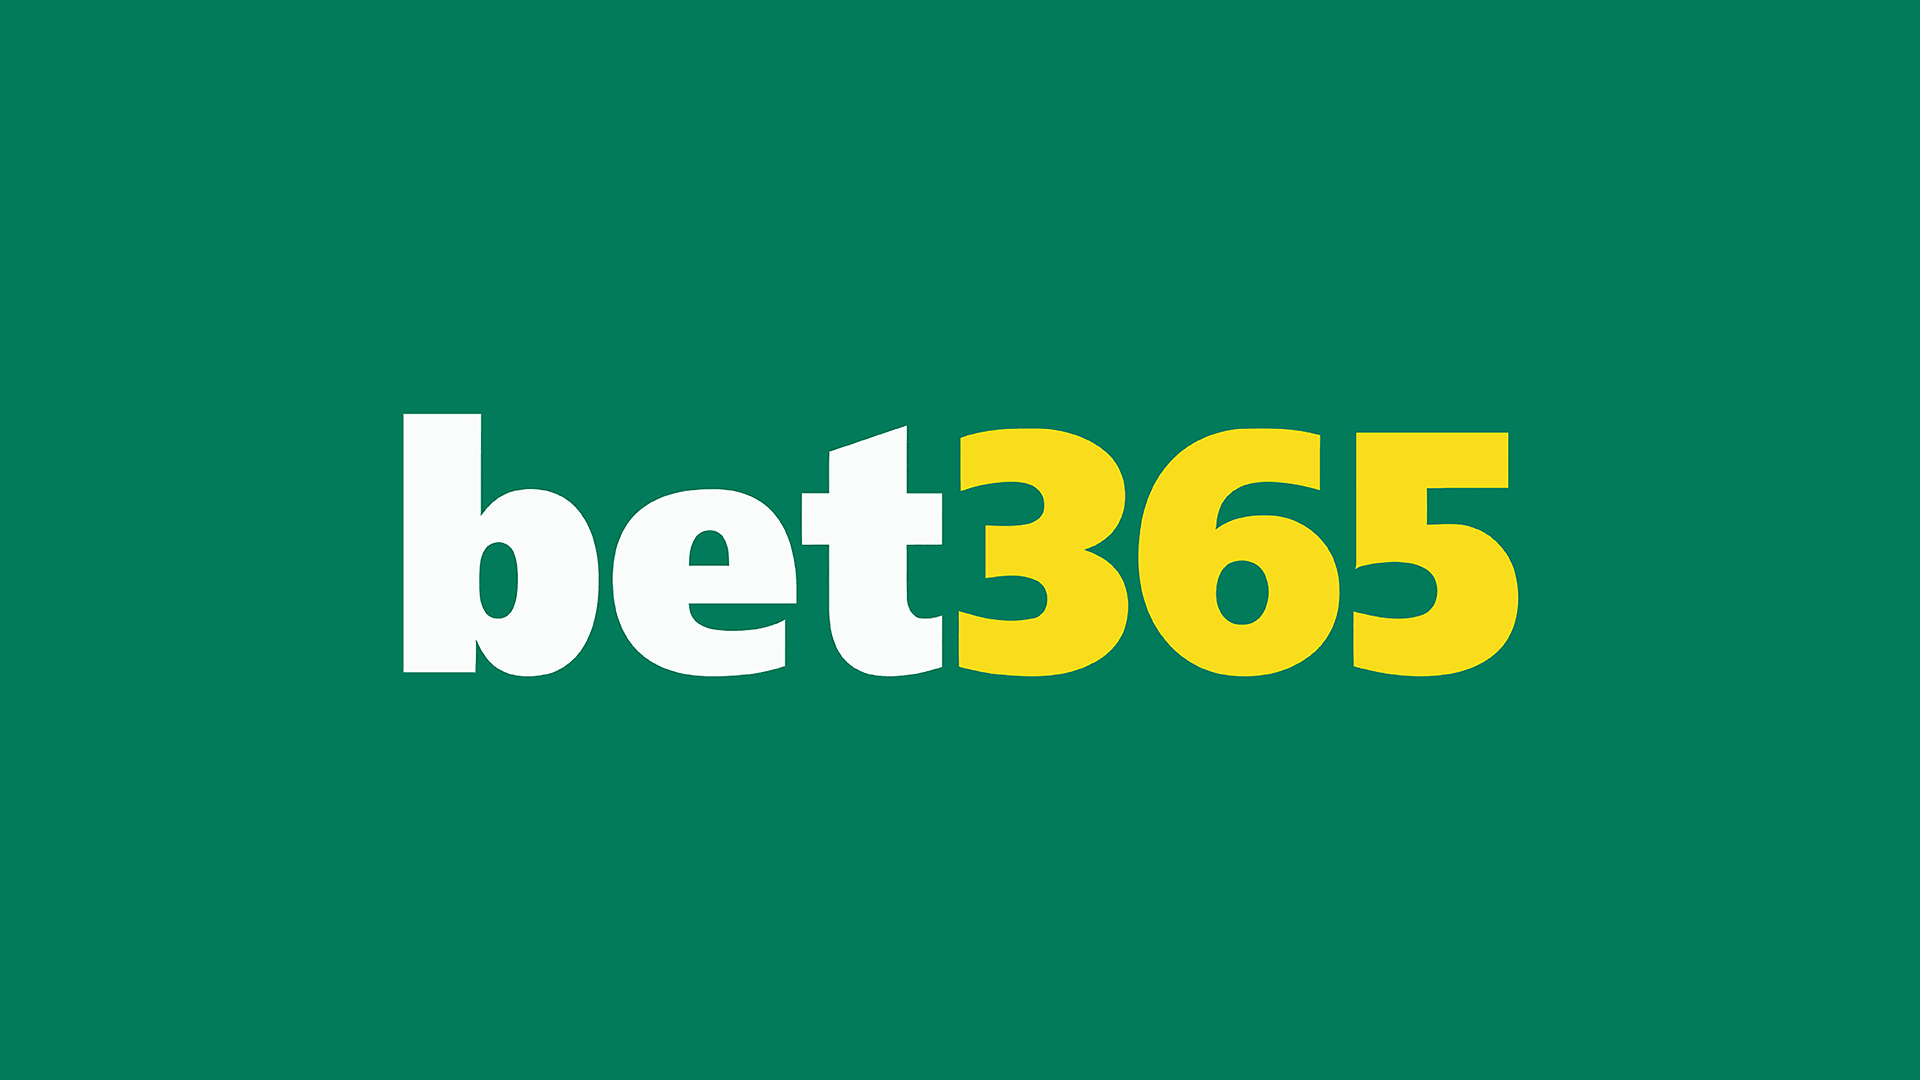 site de an谩lise futebol virtual bet365 gr谩tis